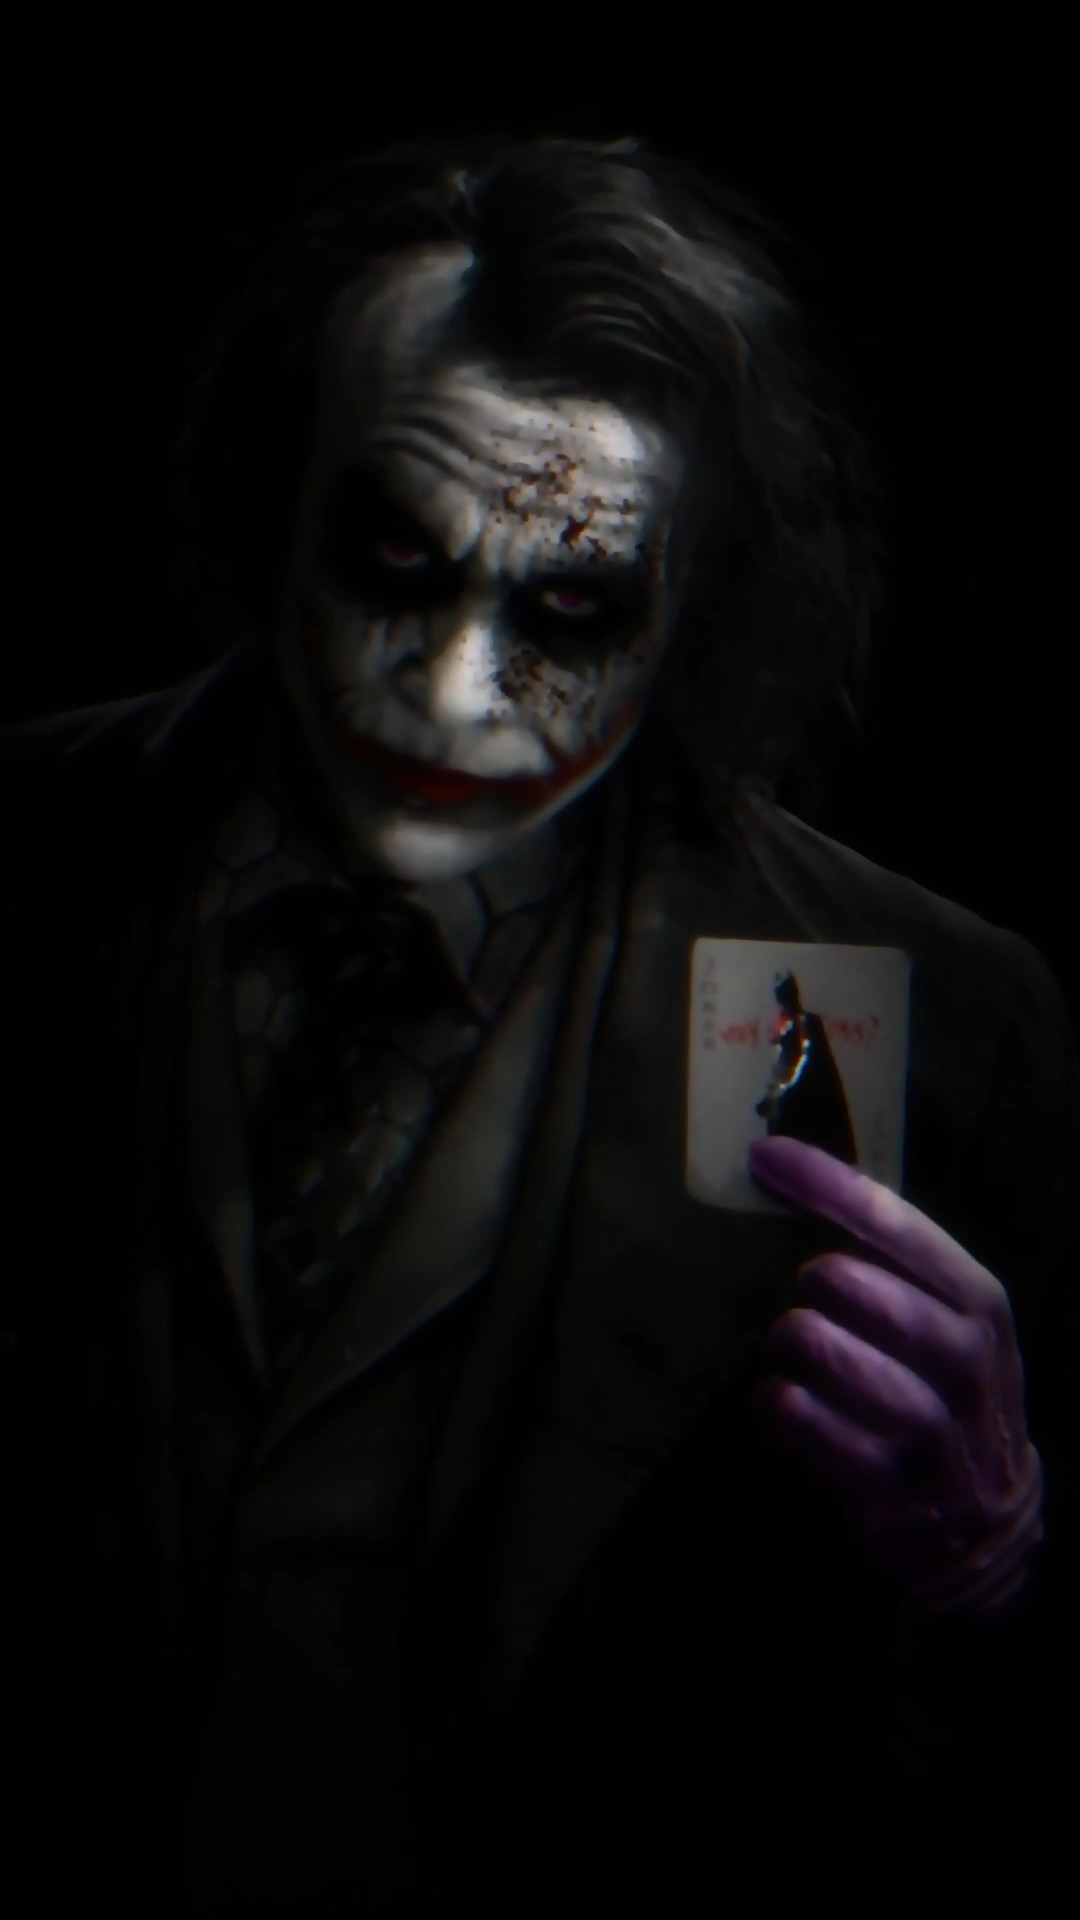 thumb for Joker Why So Serious